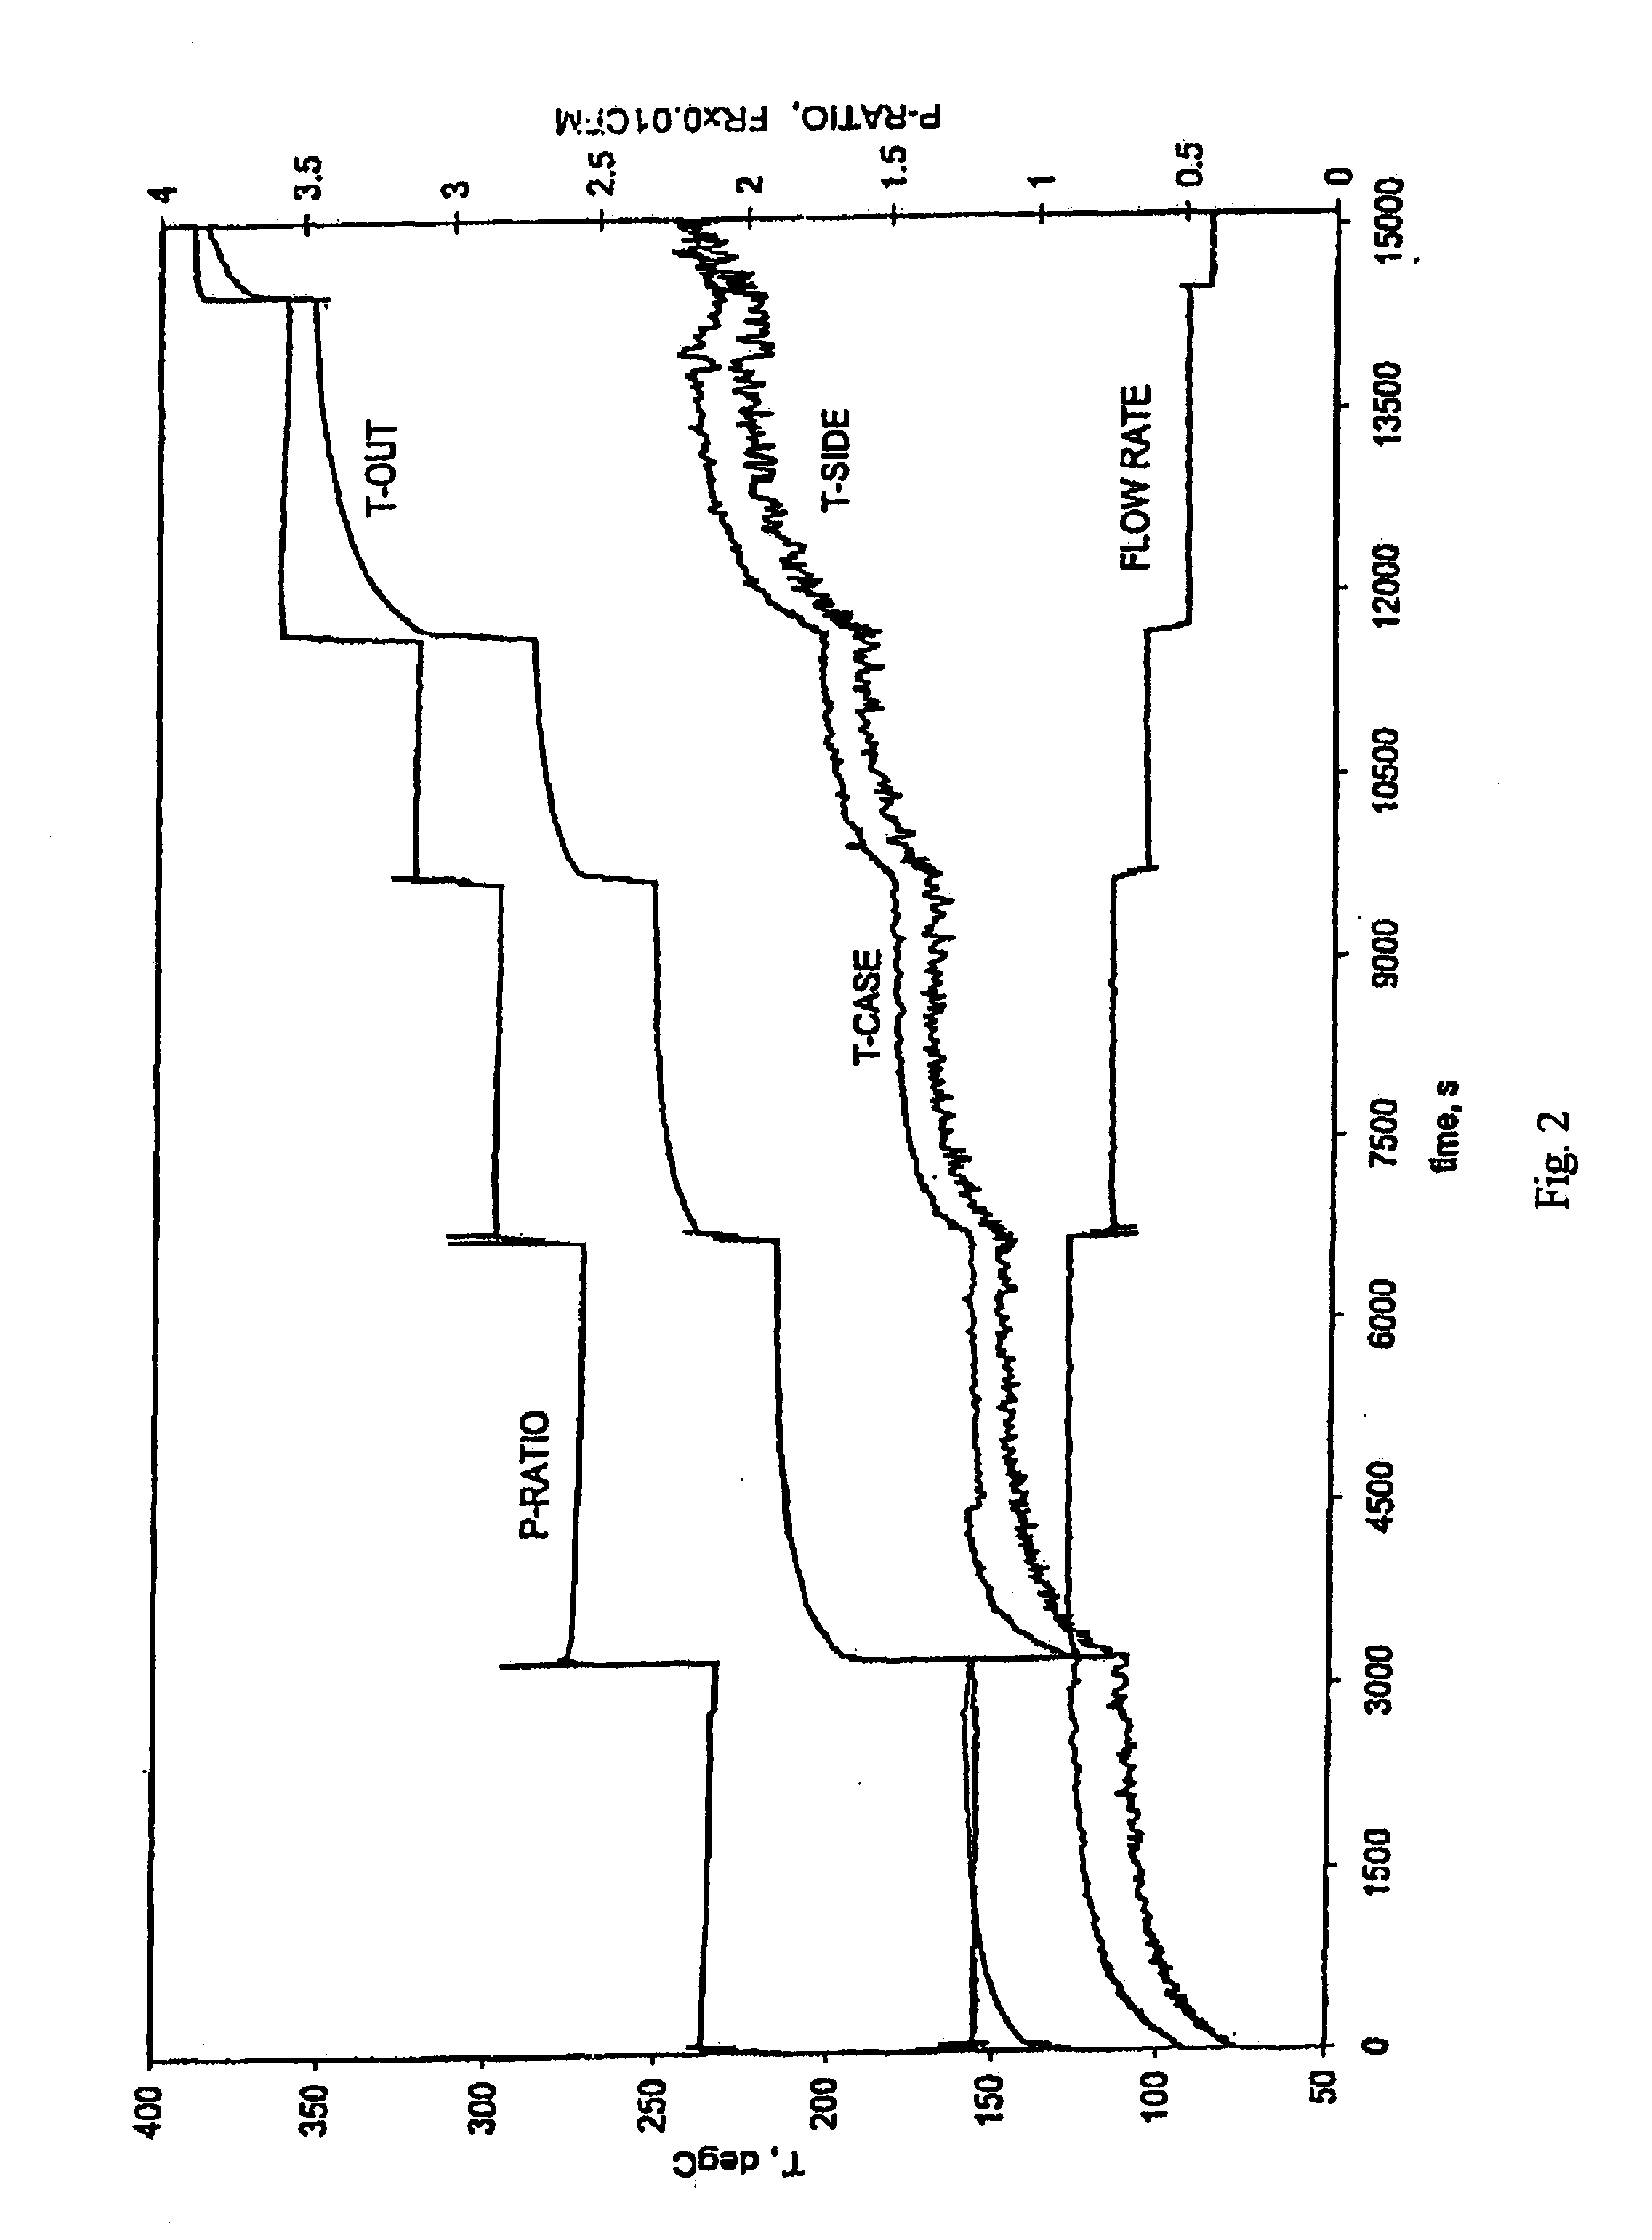 Method of Altering A Fluid-Borne Contaminant